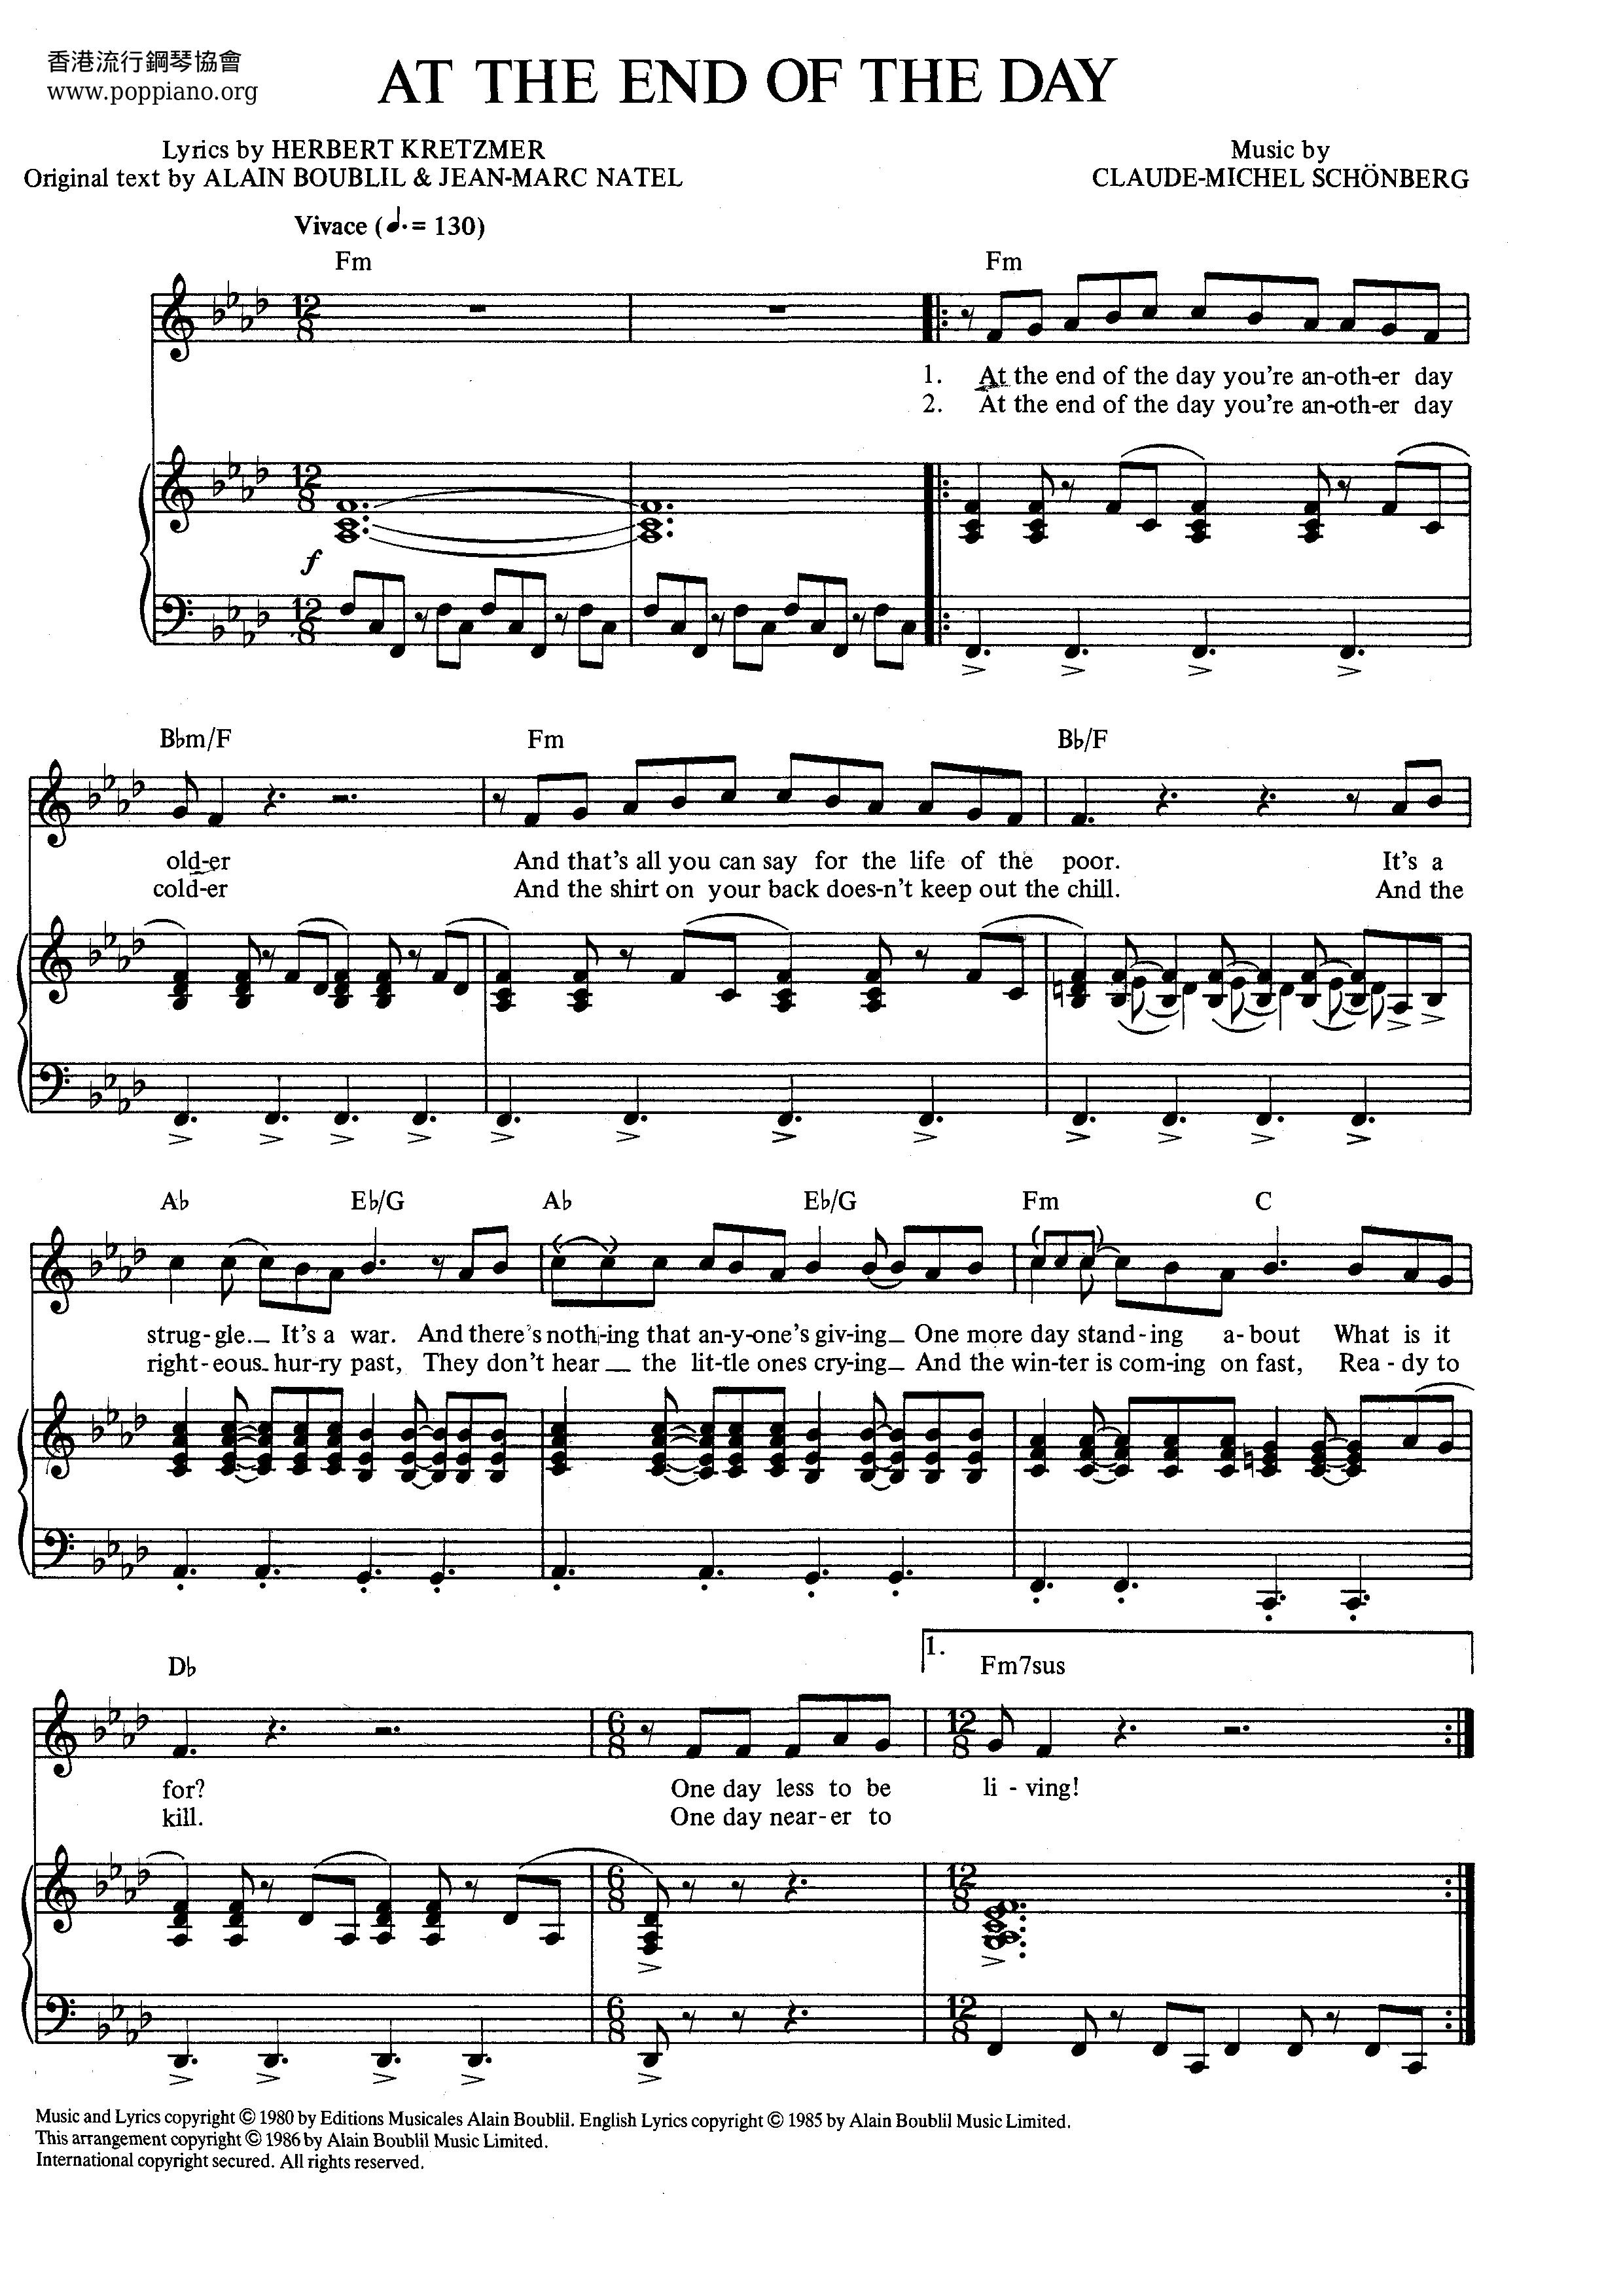 Les Miserables On My Own Sheet Music Pdf レ ミゼラブル Free Score Download